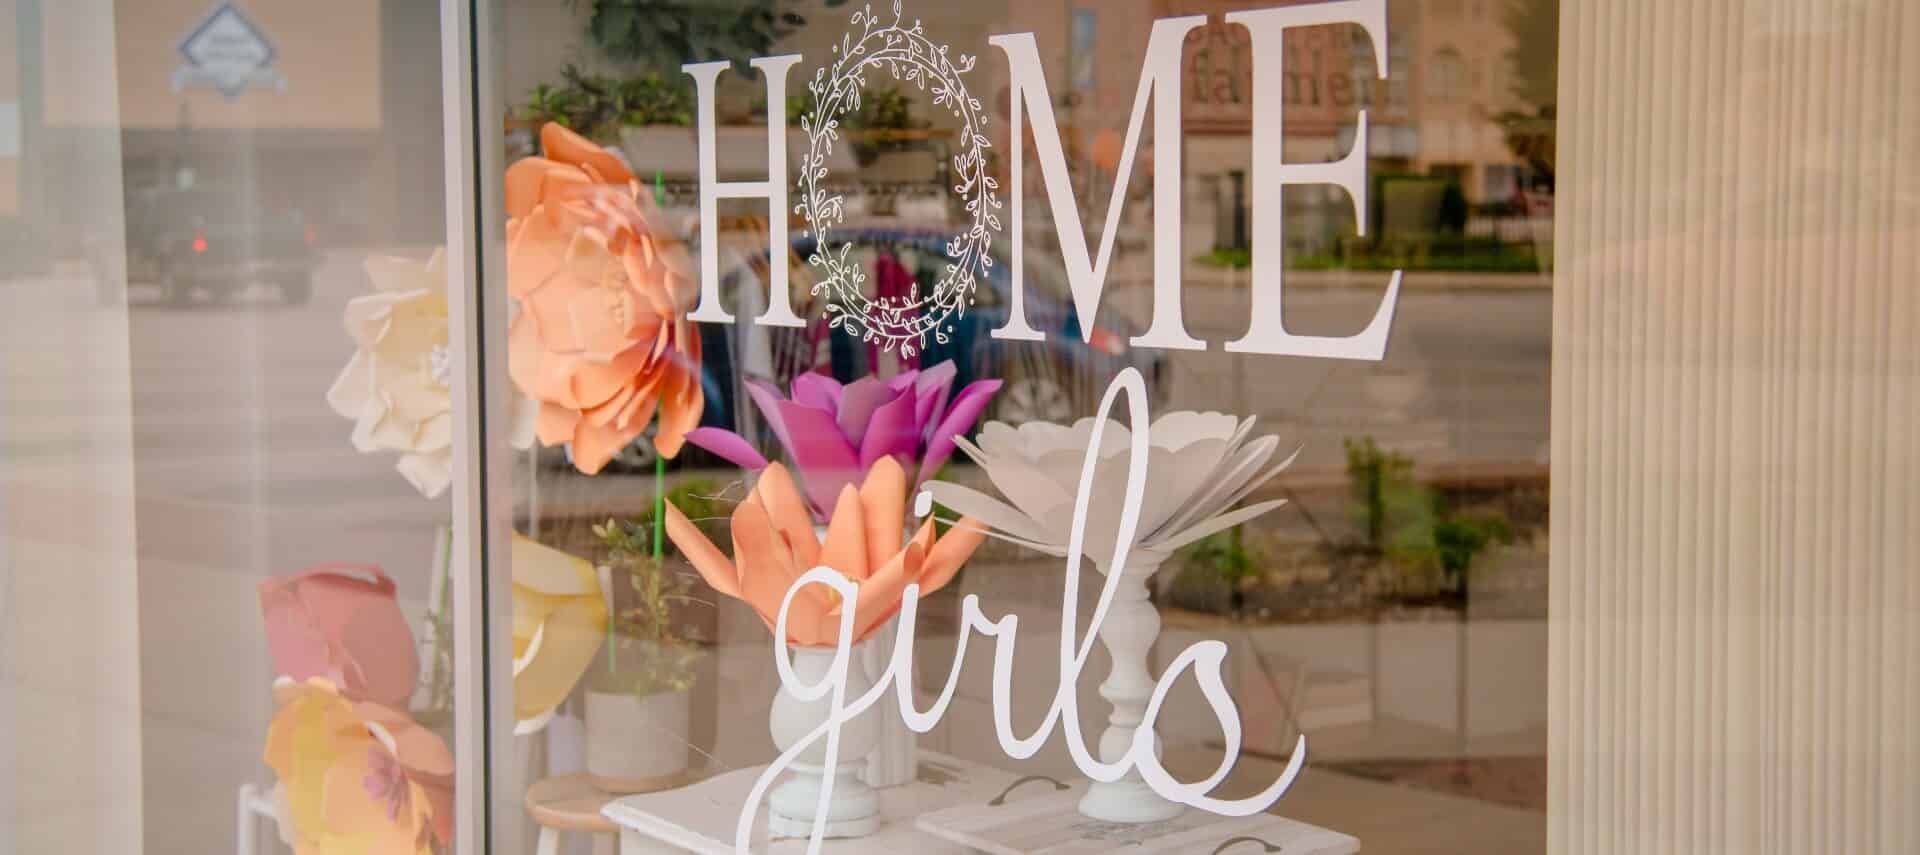 Home Girls storefront in Jacksonville Illinois